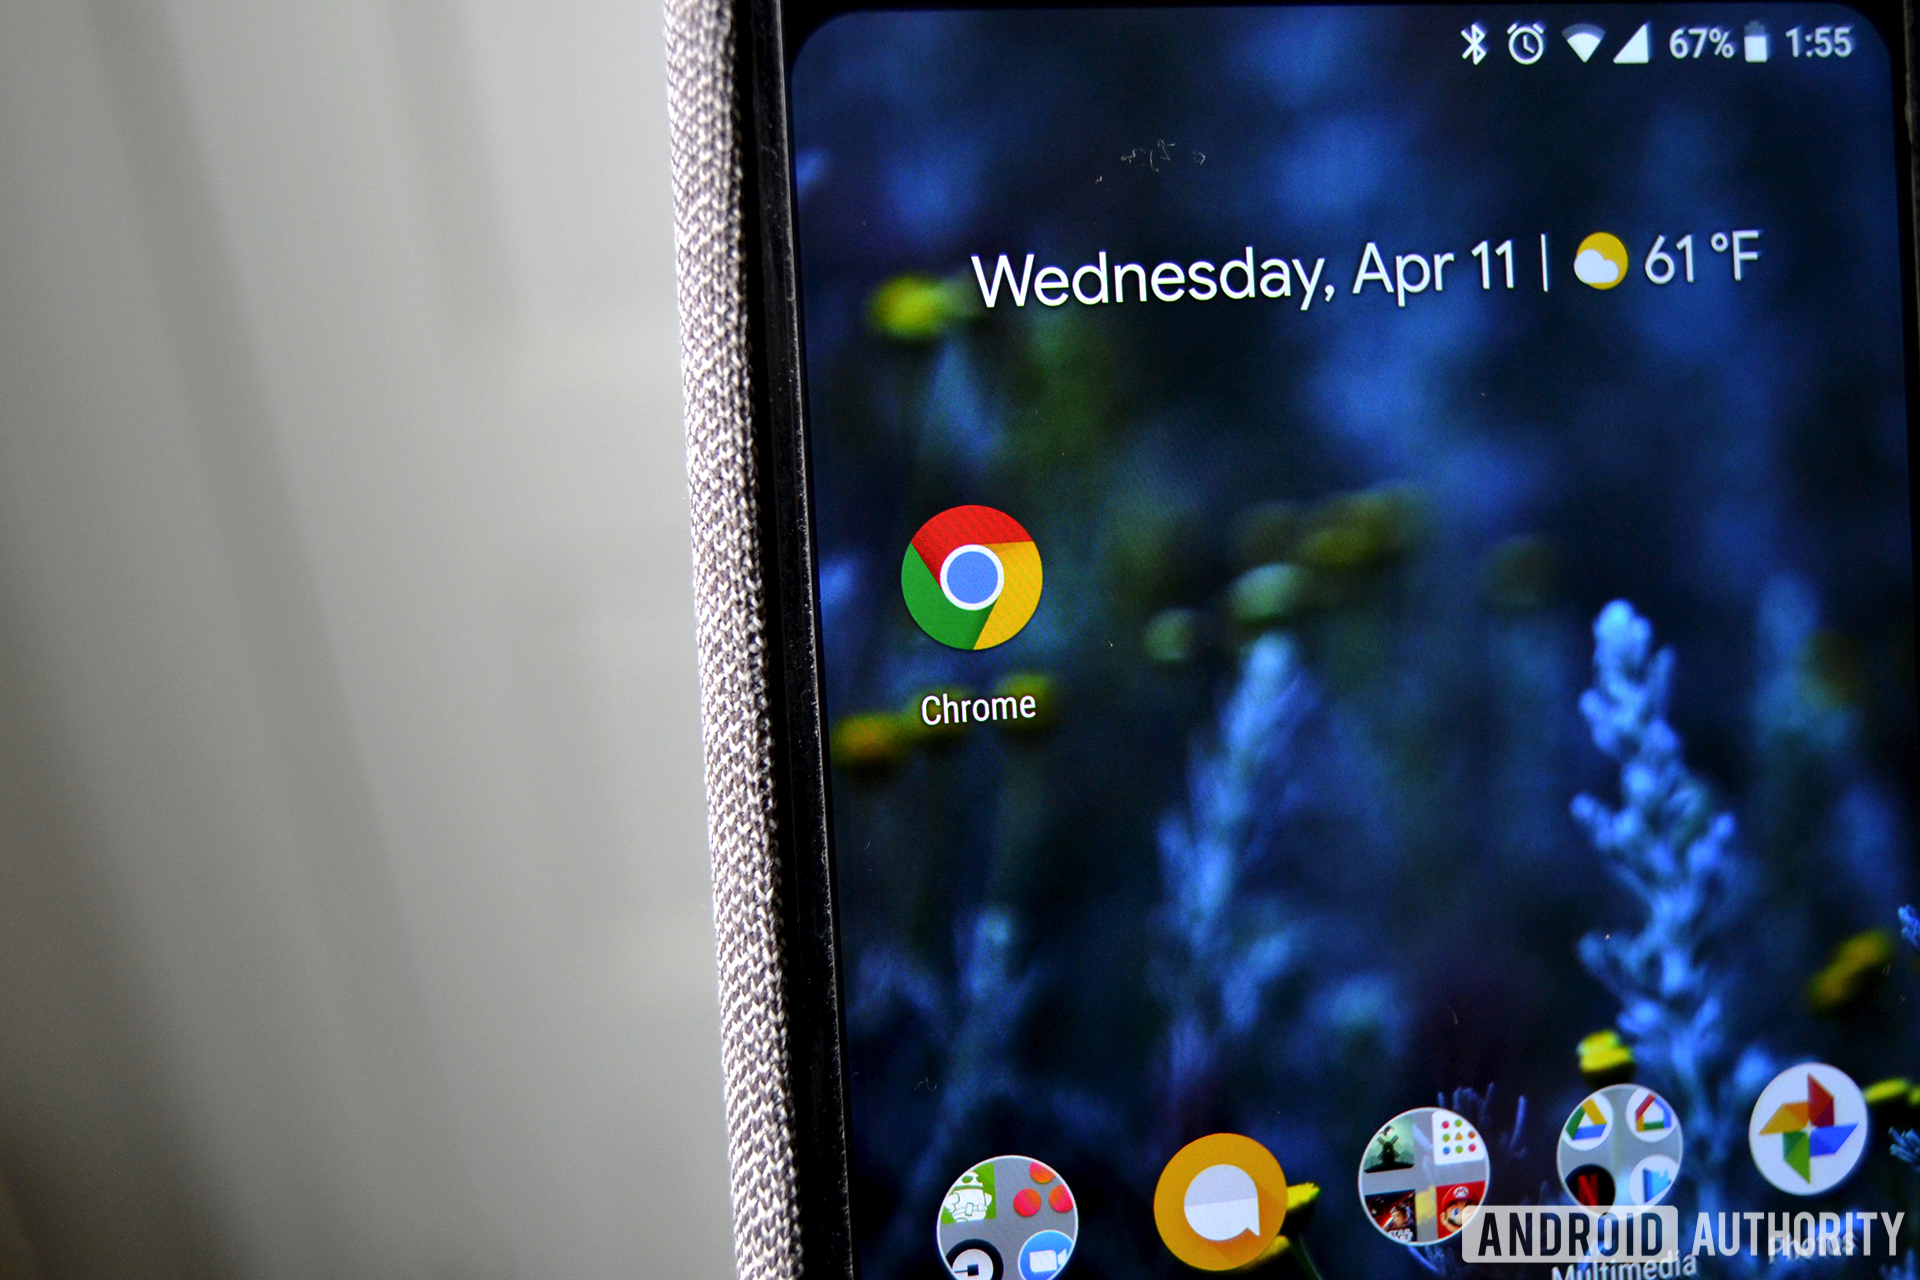 Google Chrome on the Pixel 2 XL.